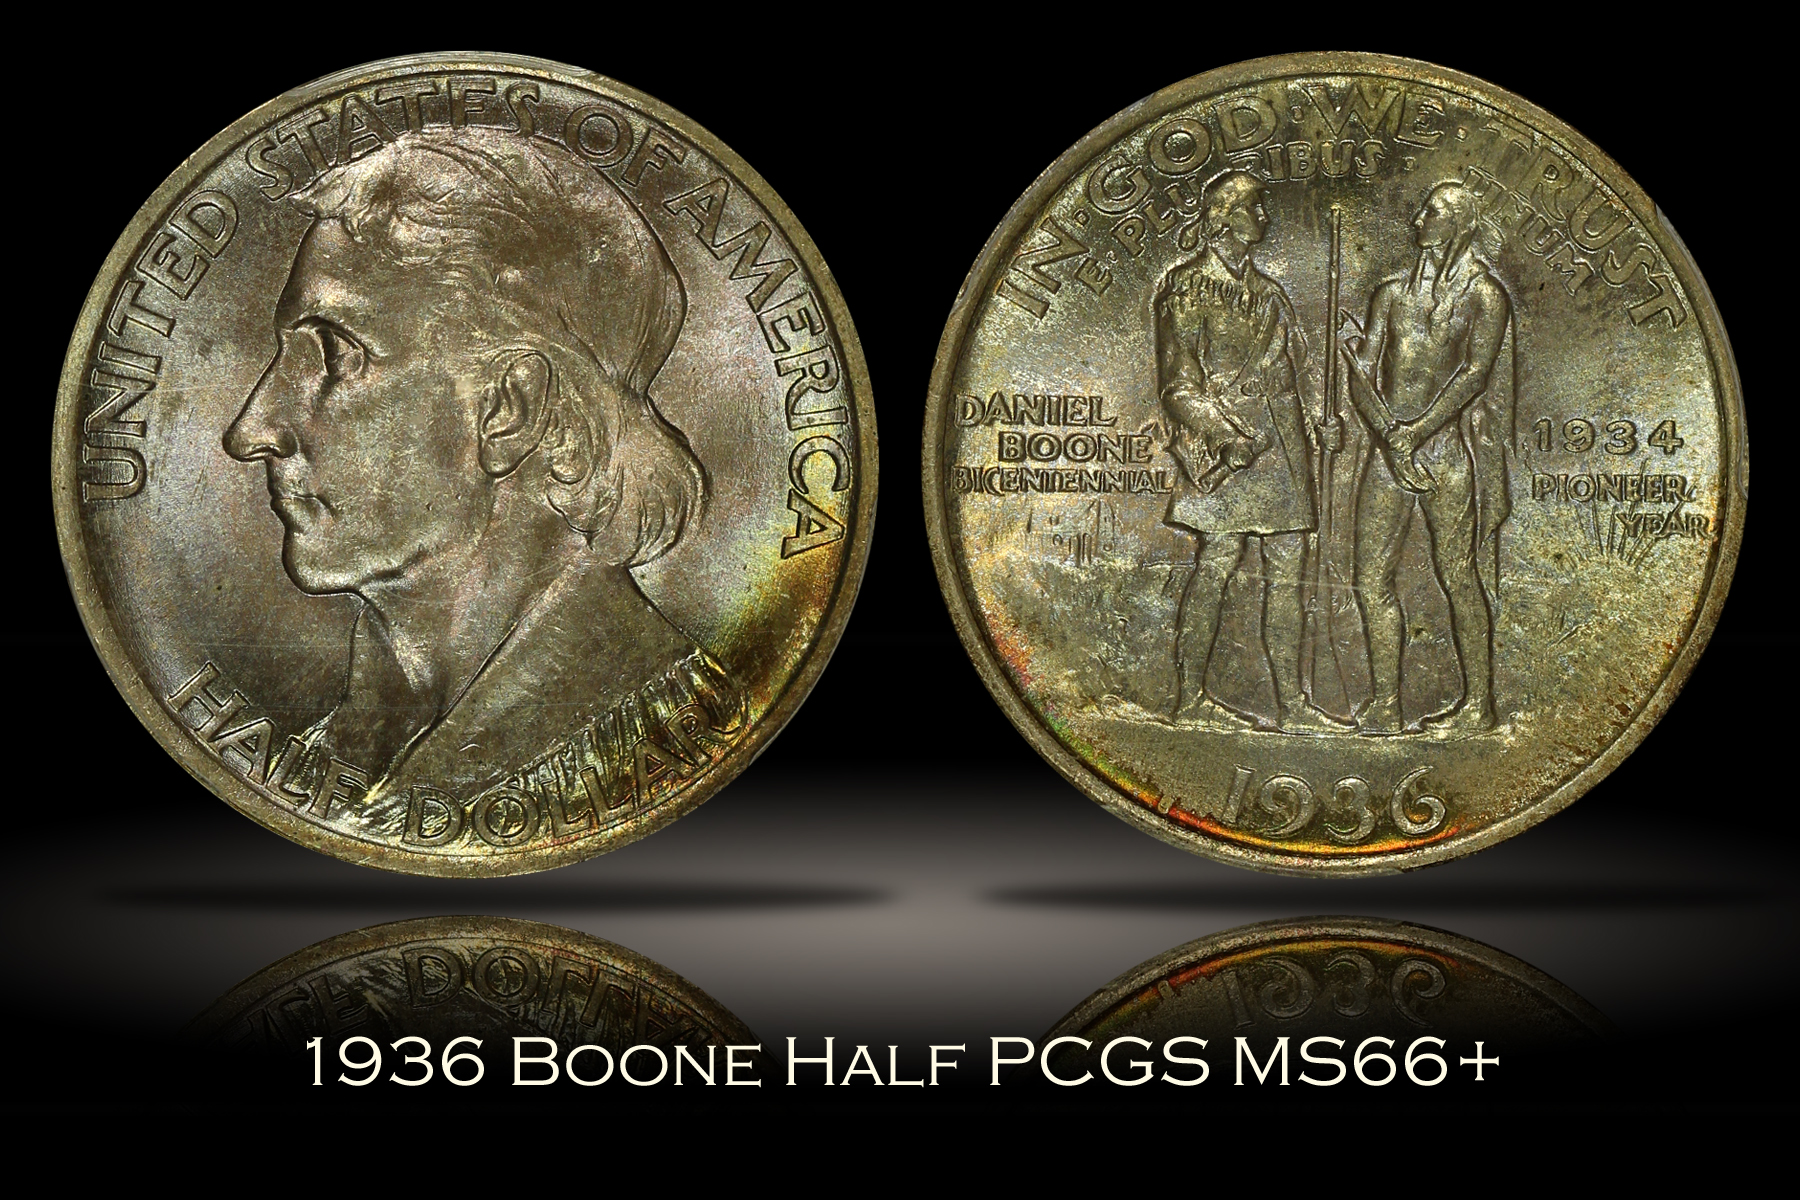 1936 Boone Half PCGS MS66+